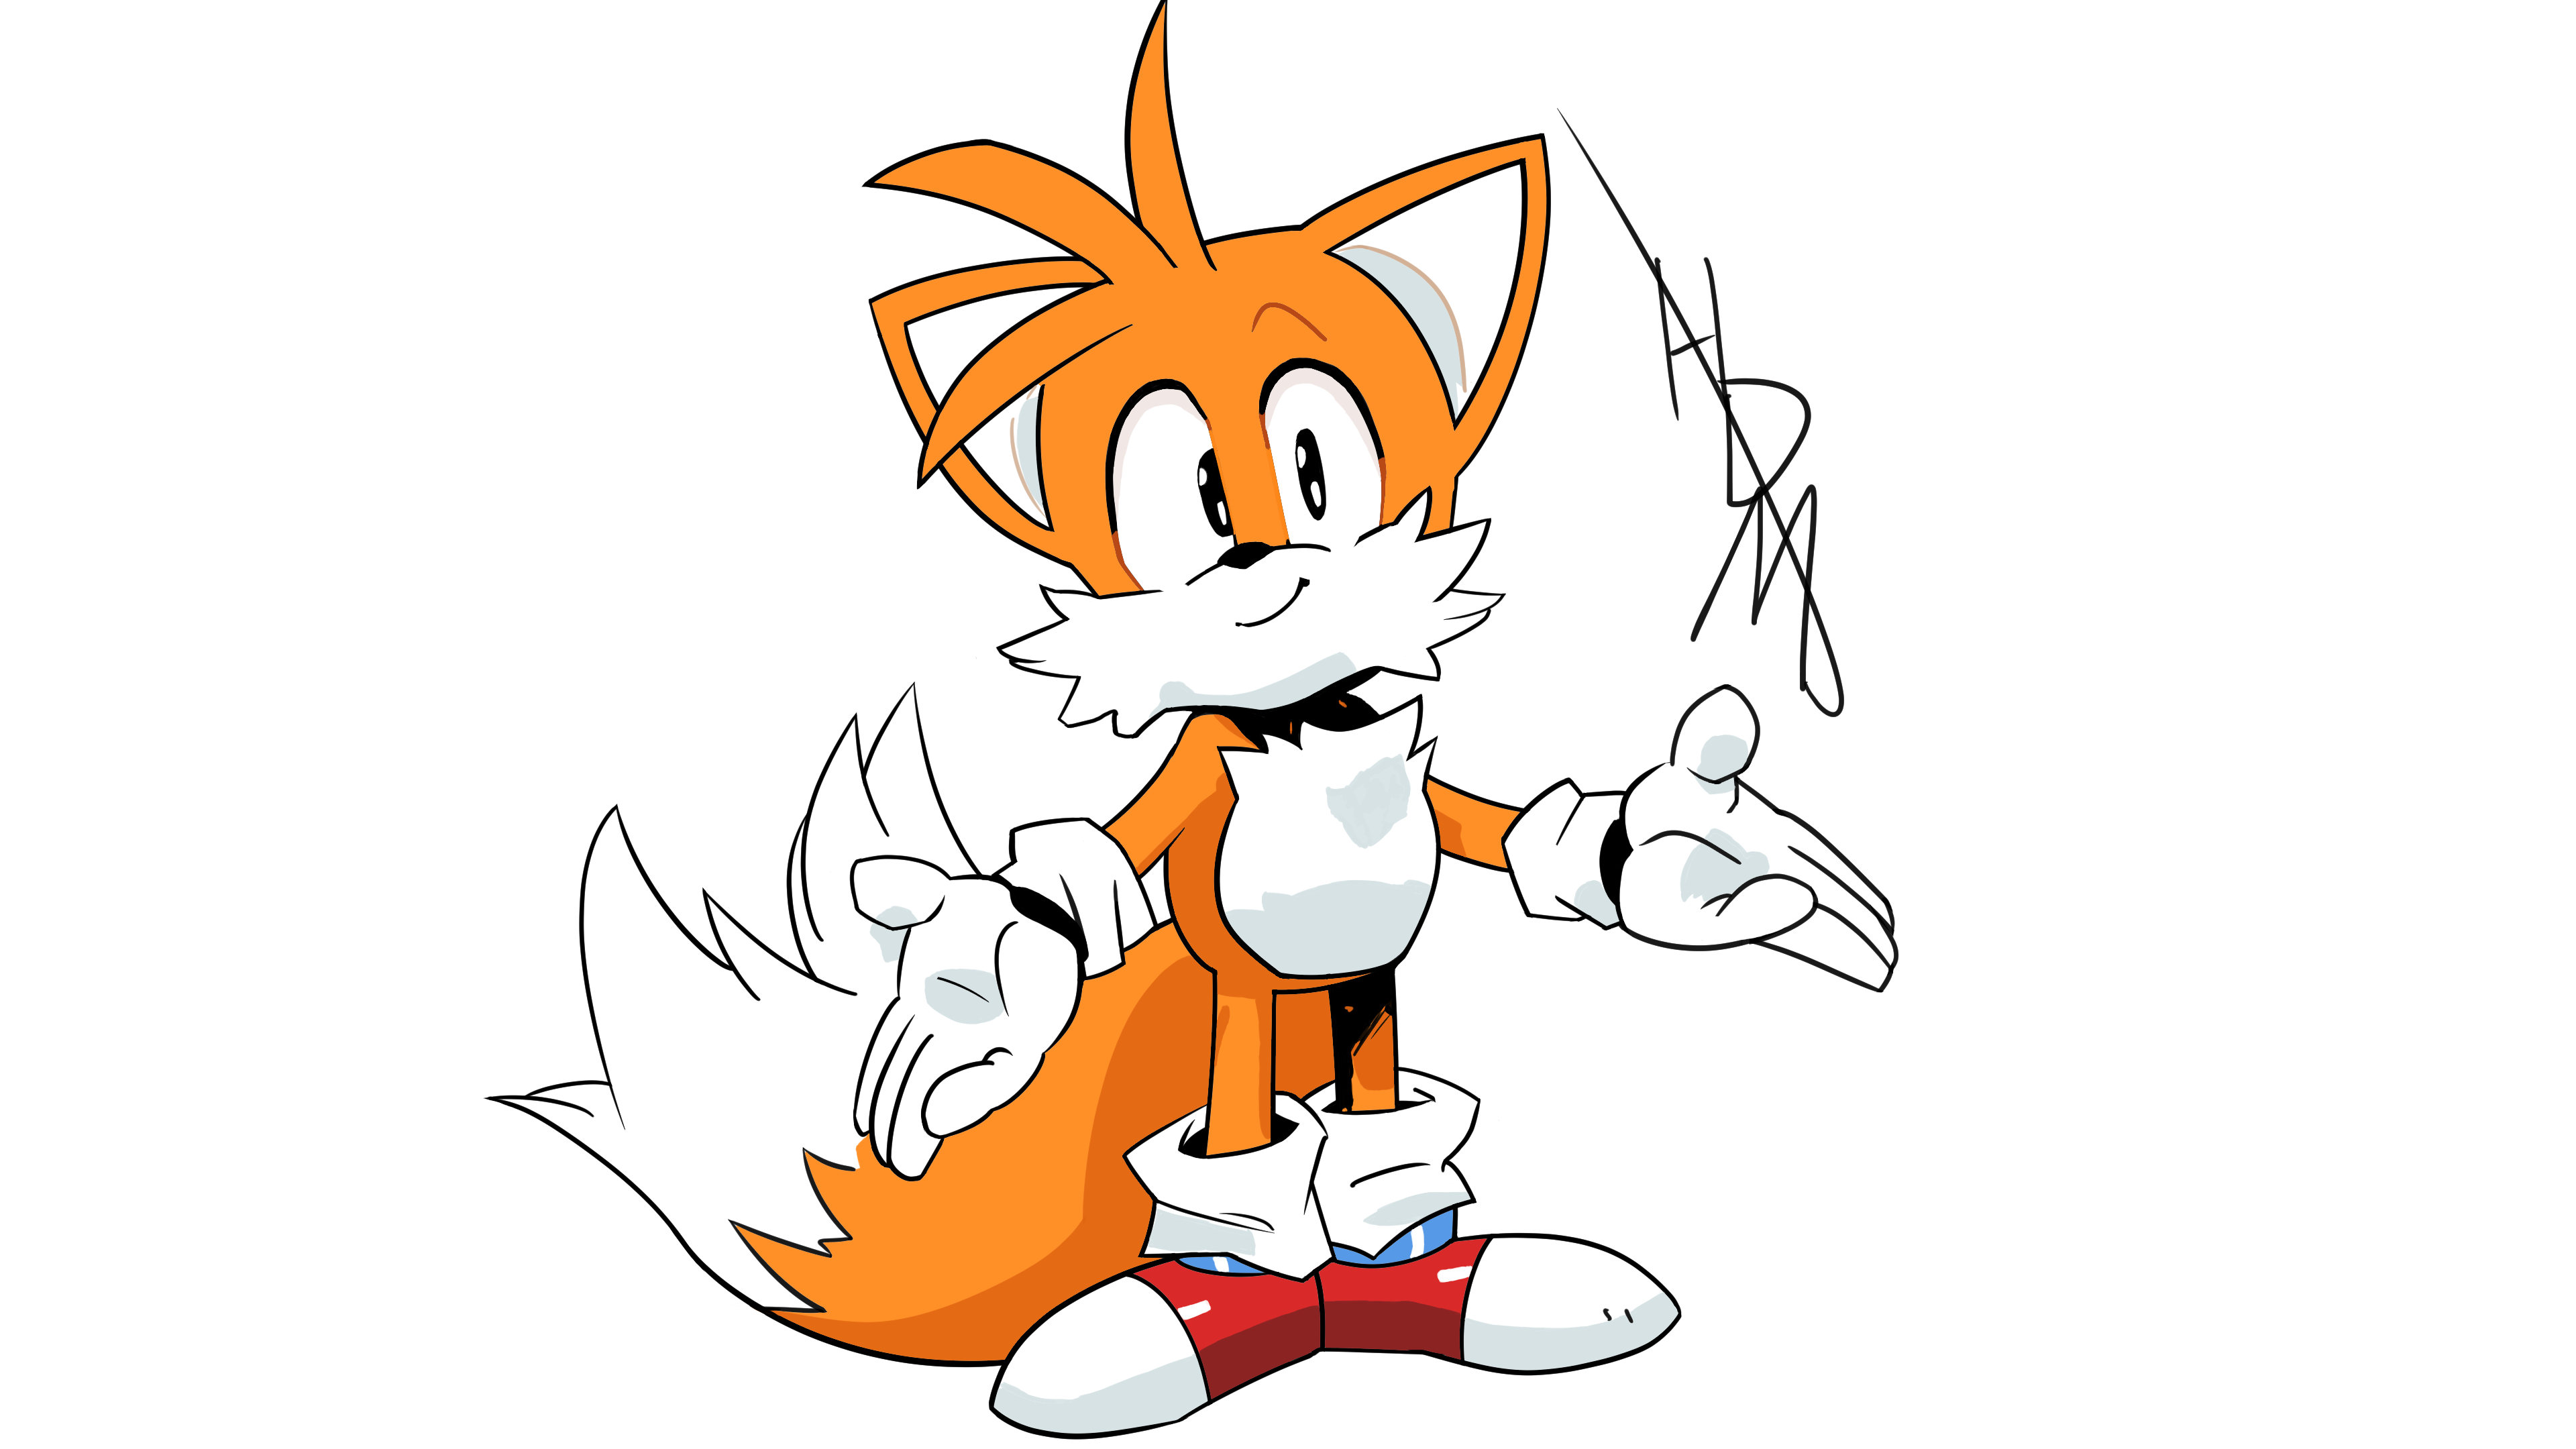 Classic Tails Sonic Mania Tyson Hesse Style Draw By Hiddenmatrixyt On